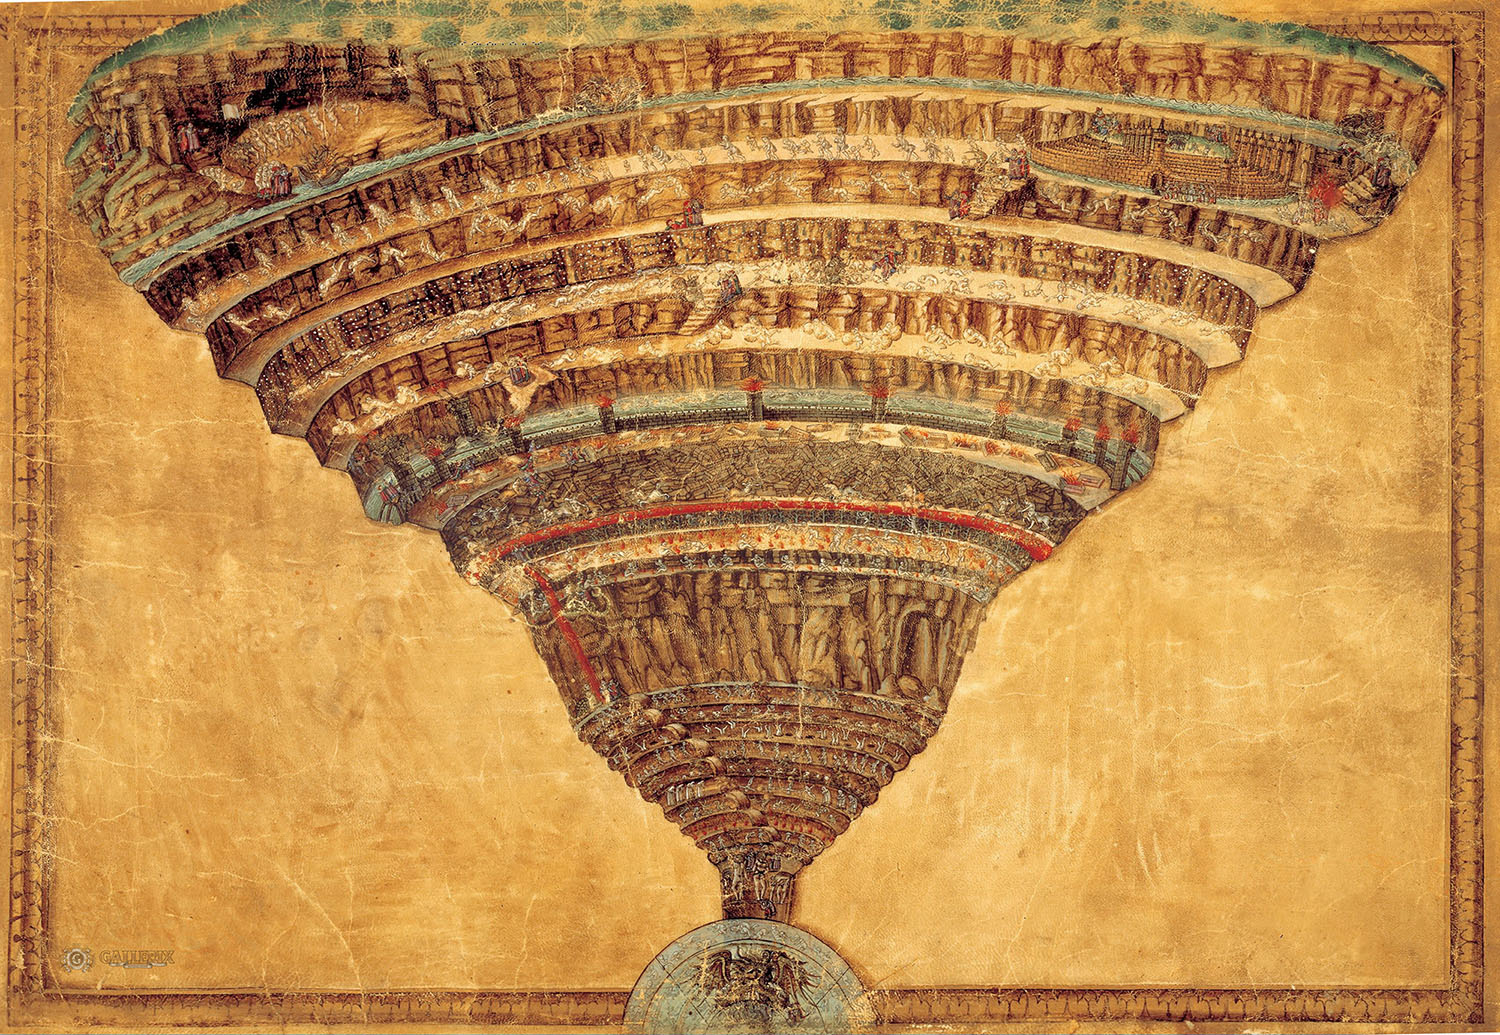 Сандро Боттичелли. "Инферно (Карта ада)". 1480-1490. Библиотека Ватикана.